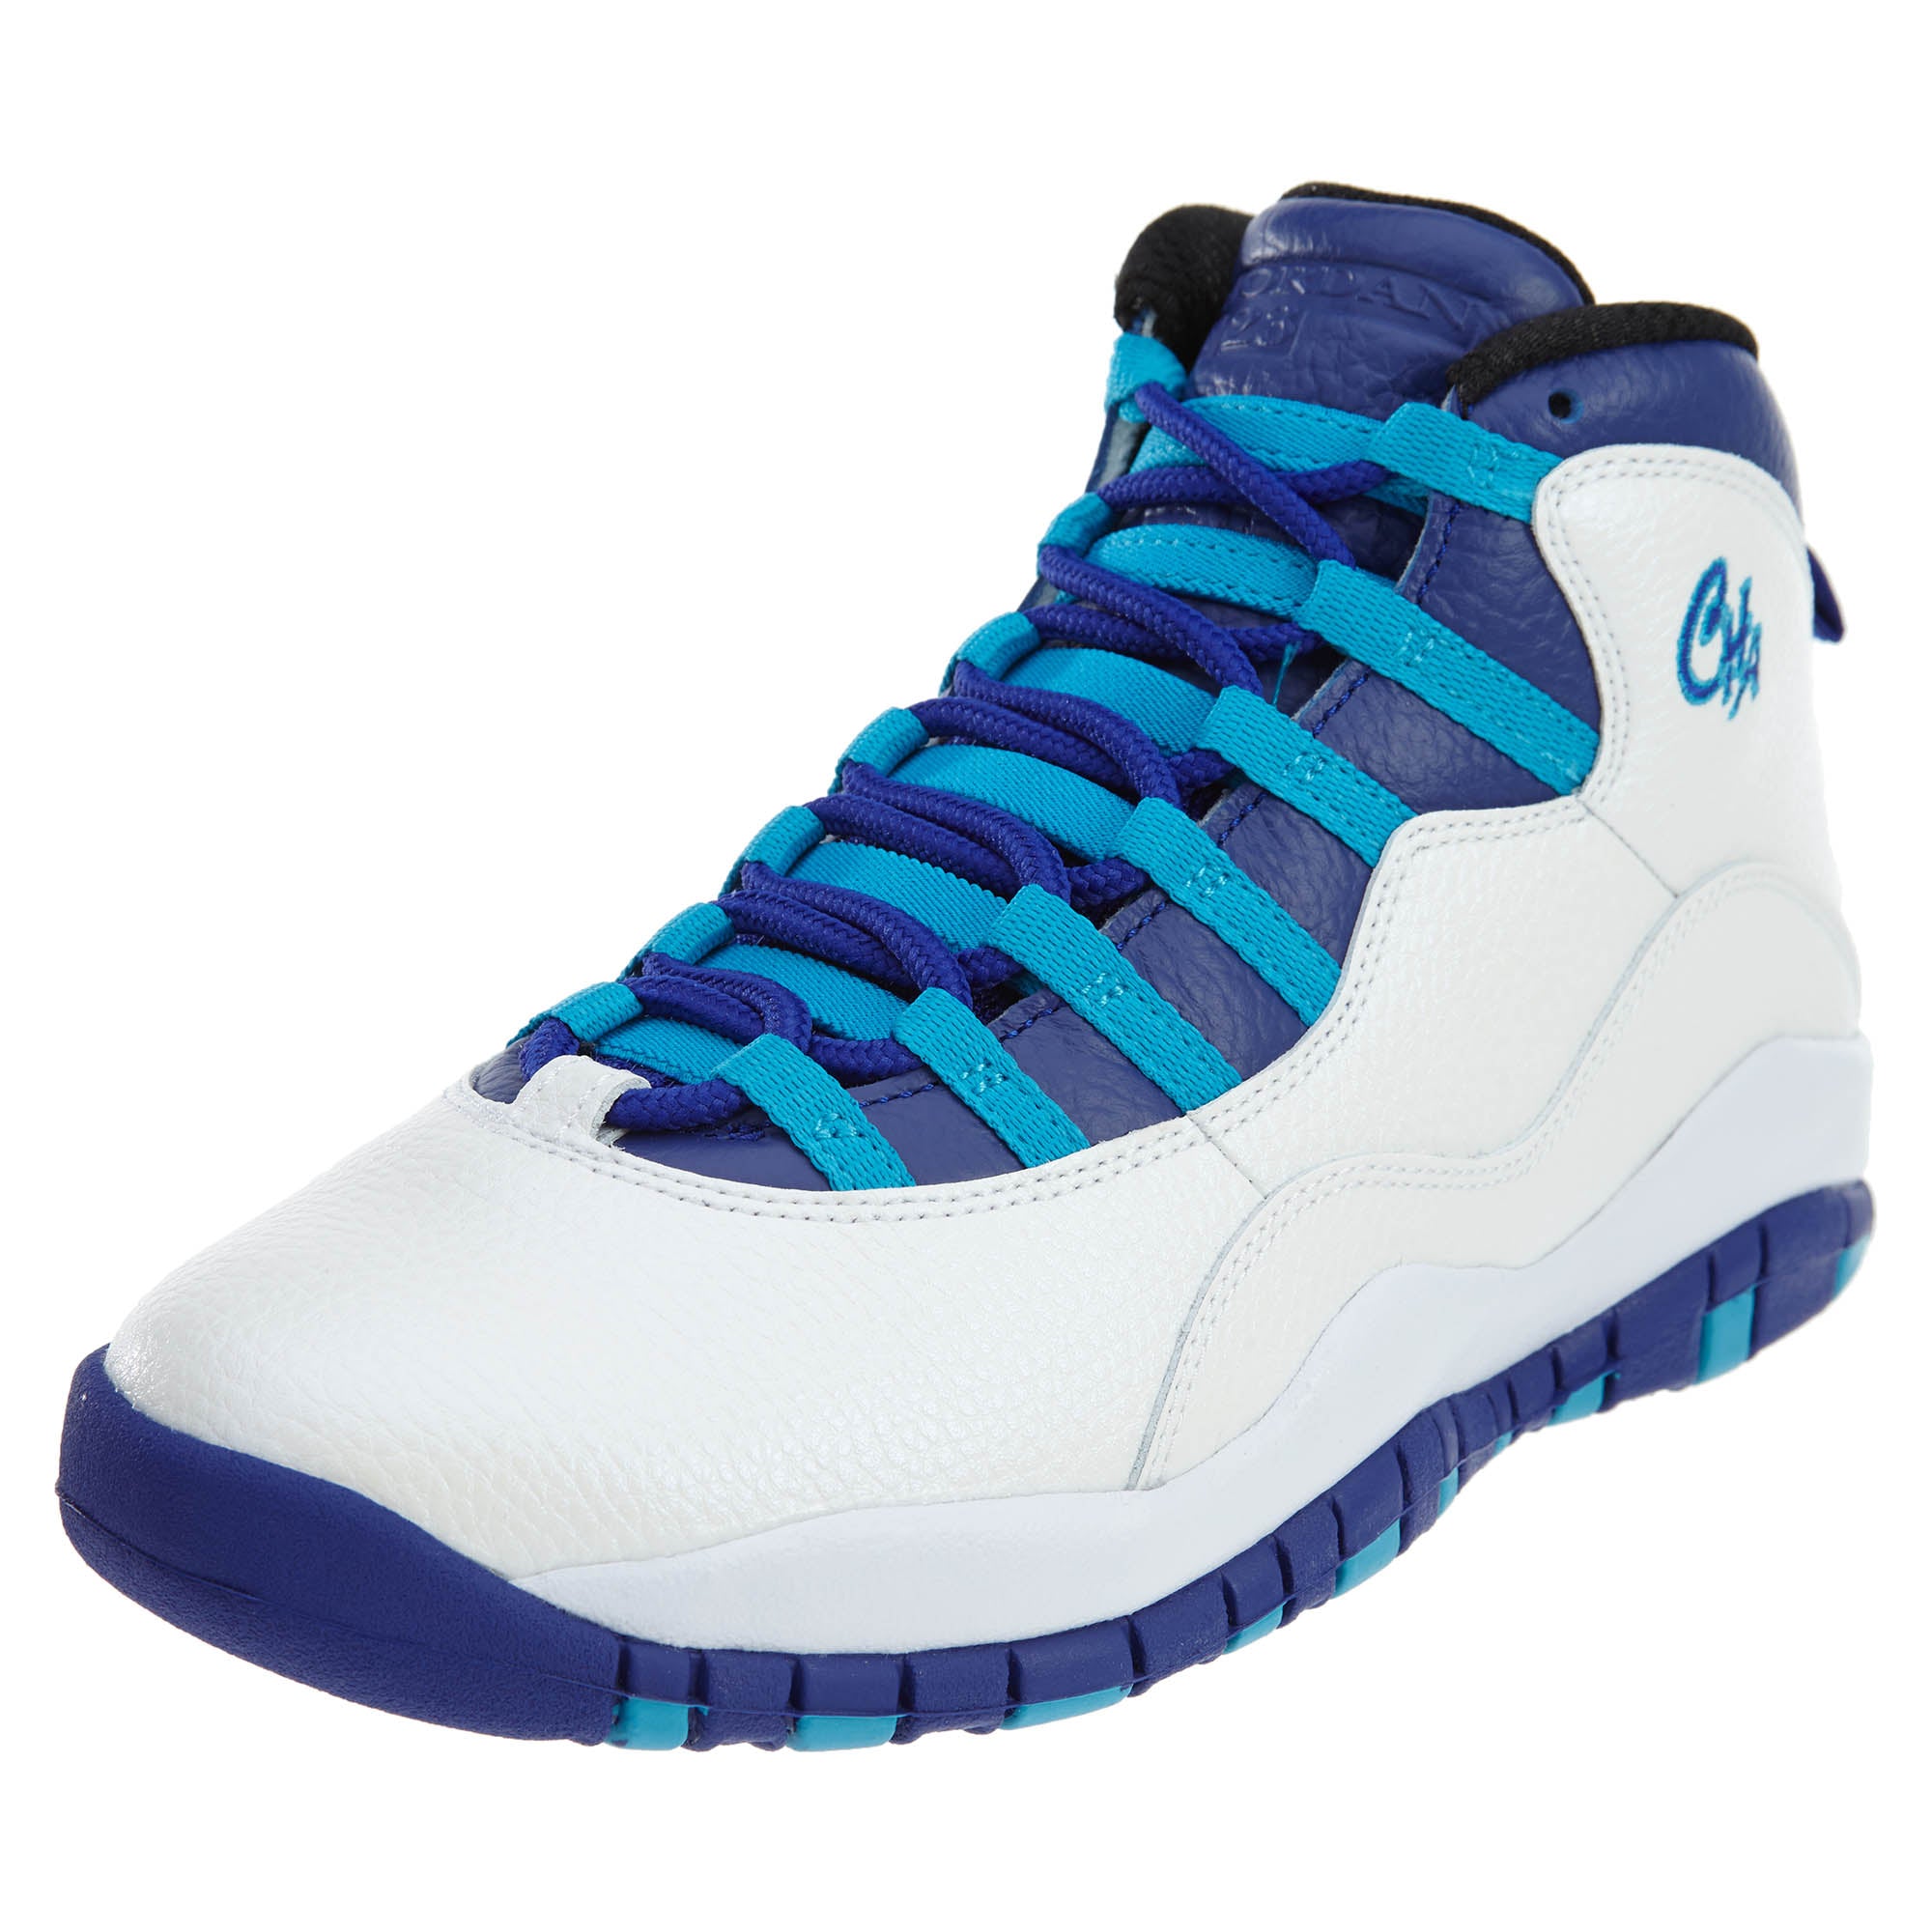 Jordan Air Retro 10 Basketball Shoes Men's Shoes #310805-107